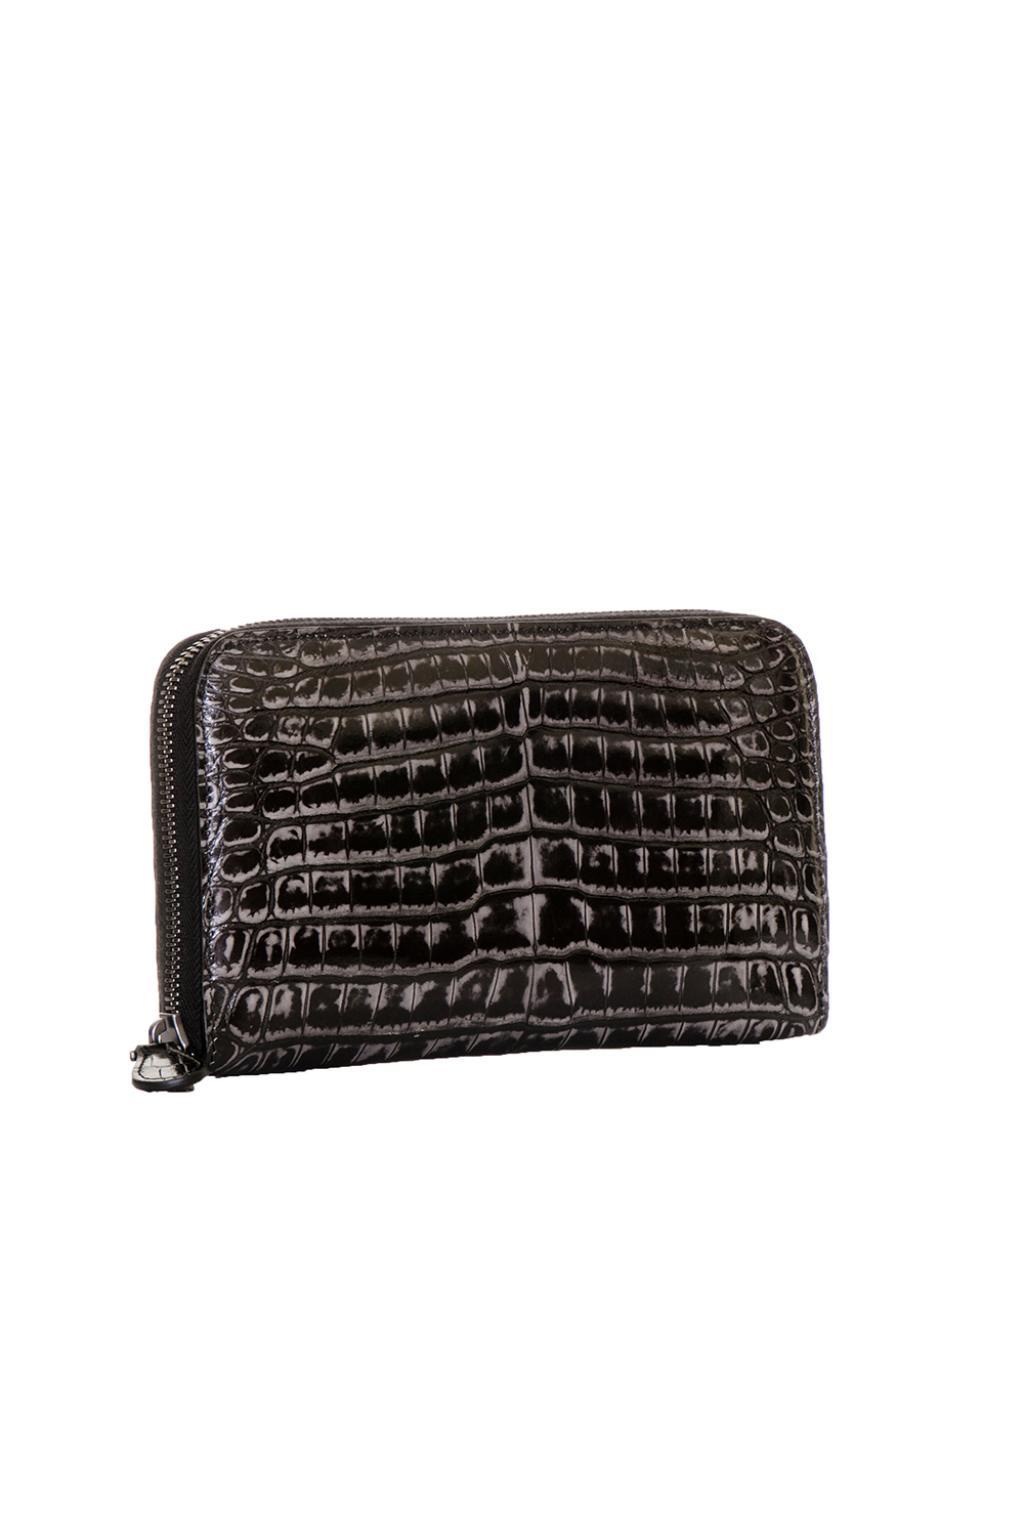 Bottega Veneta Leather Black Crocodile Zip Around Wallet Black - Lyst